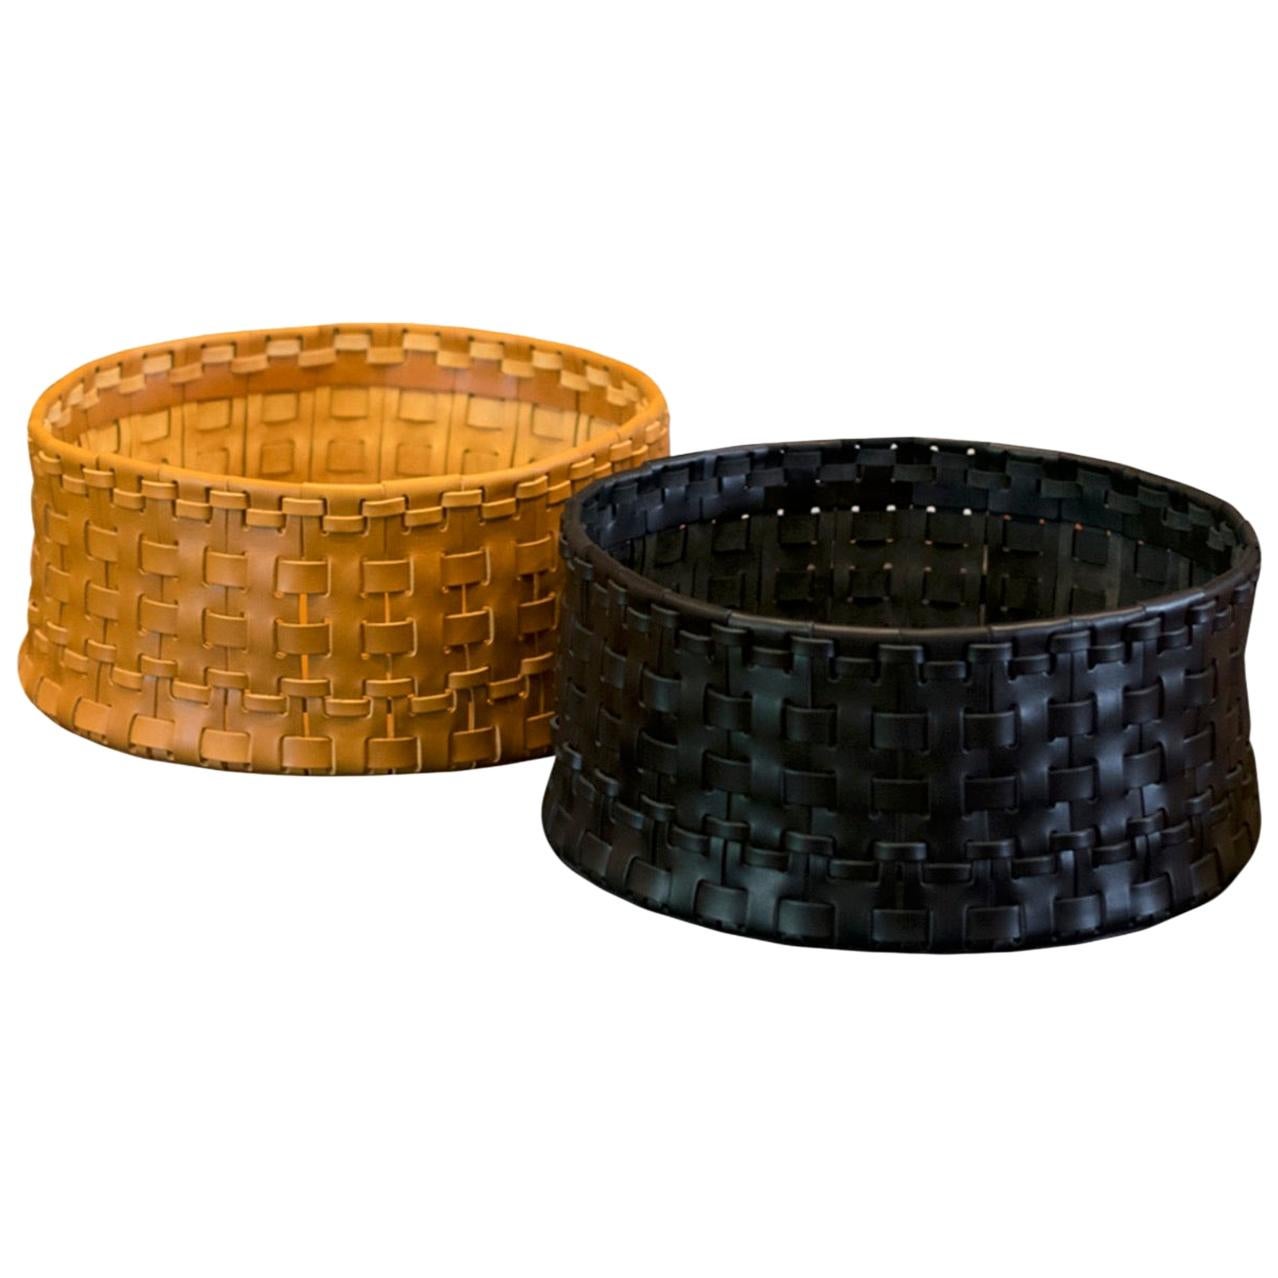 Oscar Maschera Woven Leather Basket